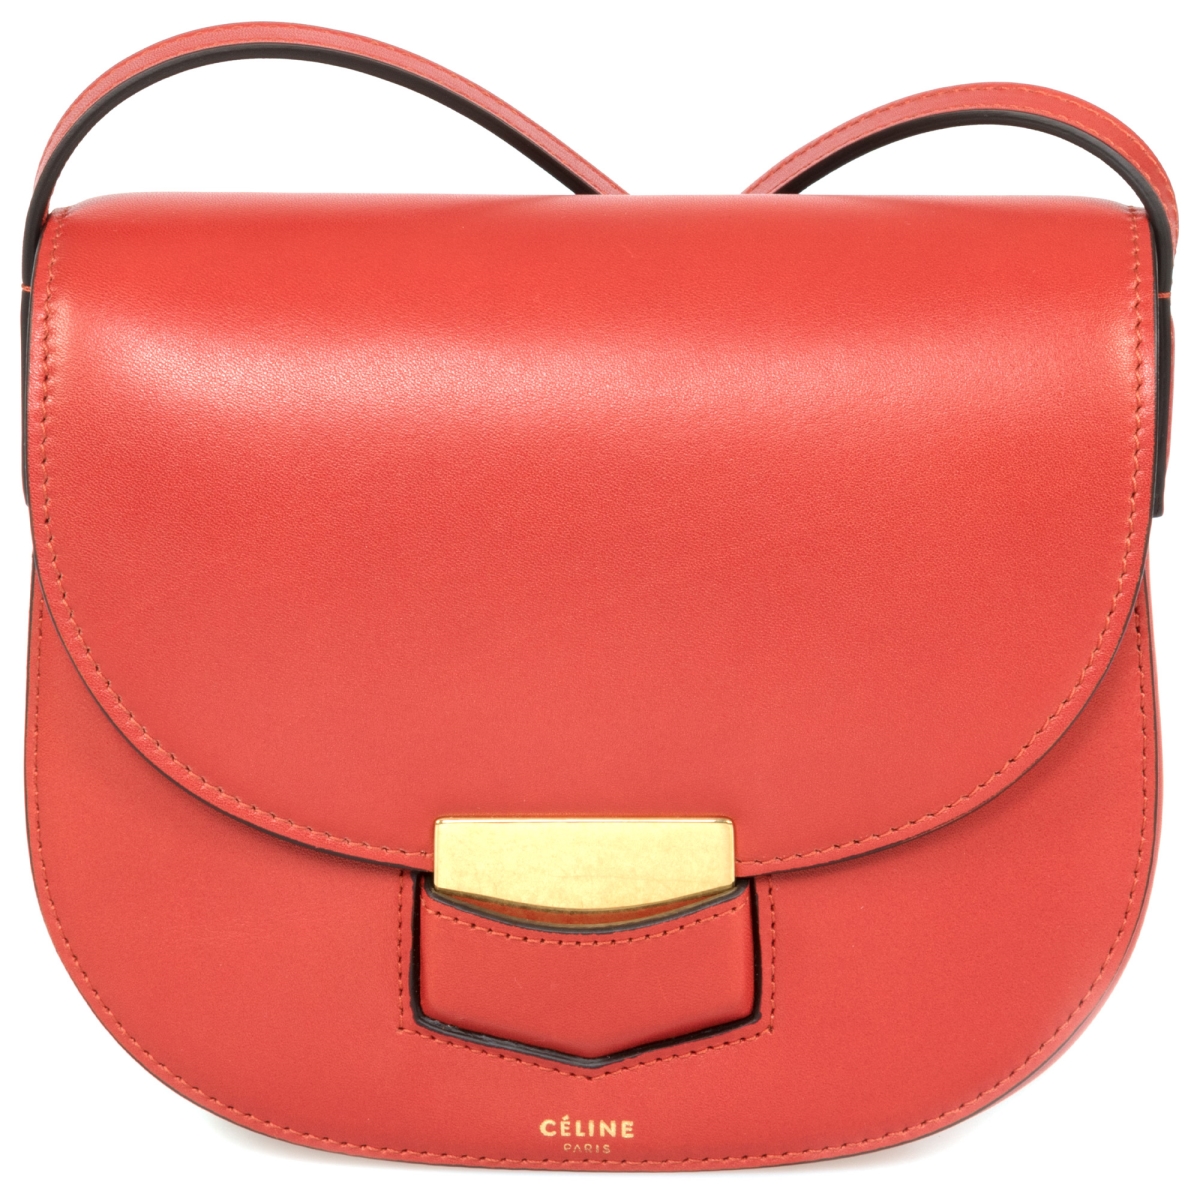 Picture of Celine CEL-HBAG-TROTTEUR-RED-S Trotteur Small Red Calfskin Leather Crossbody Handbag